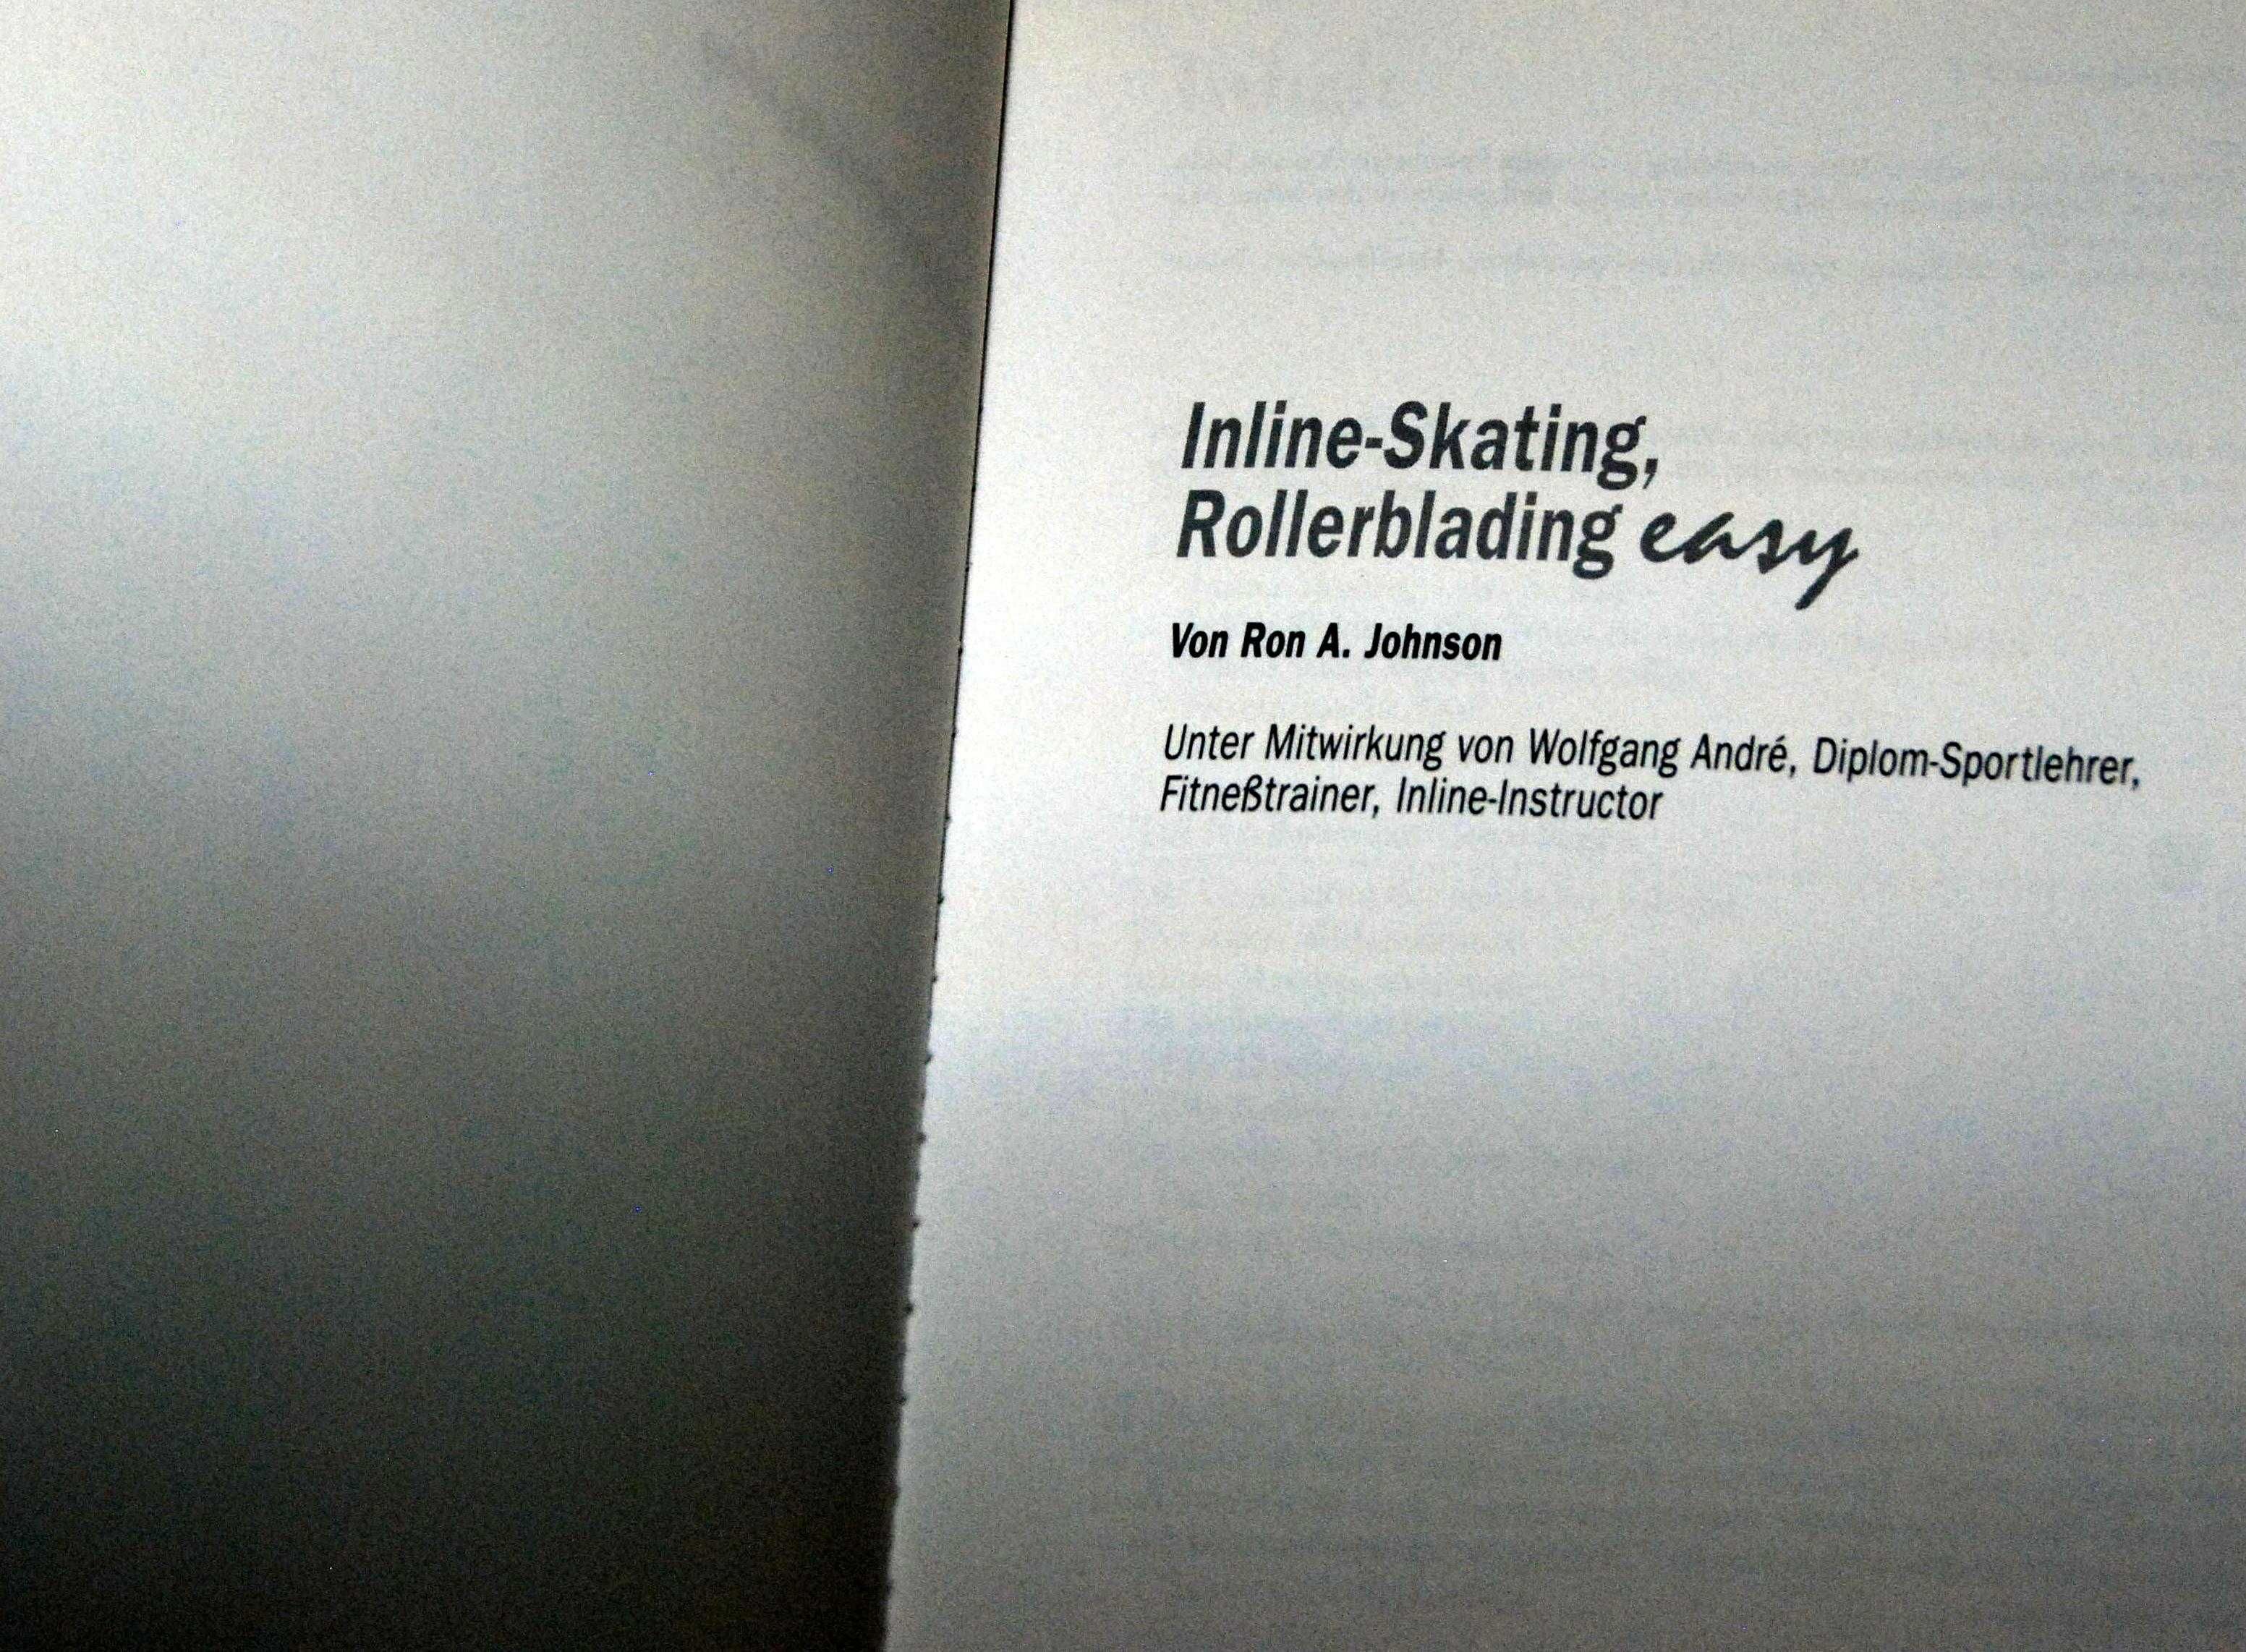 Jazda na rolkach po niemiecku Inline scating Rollerblading